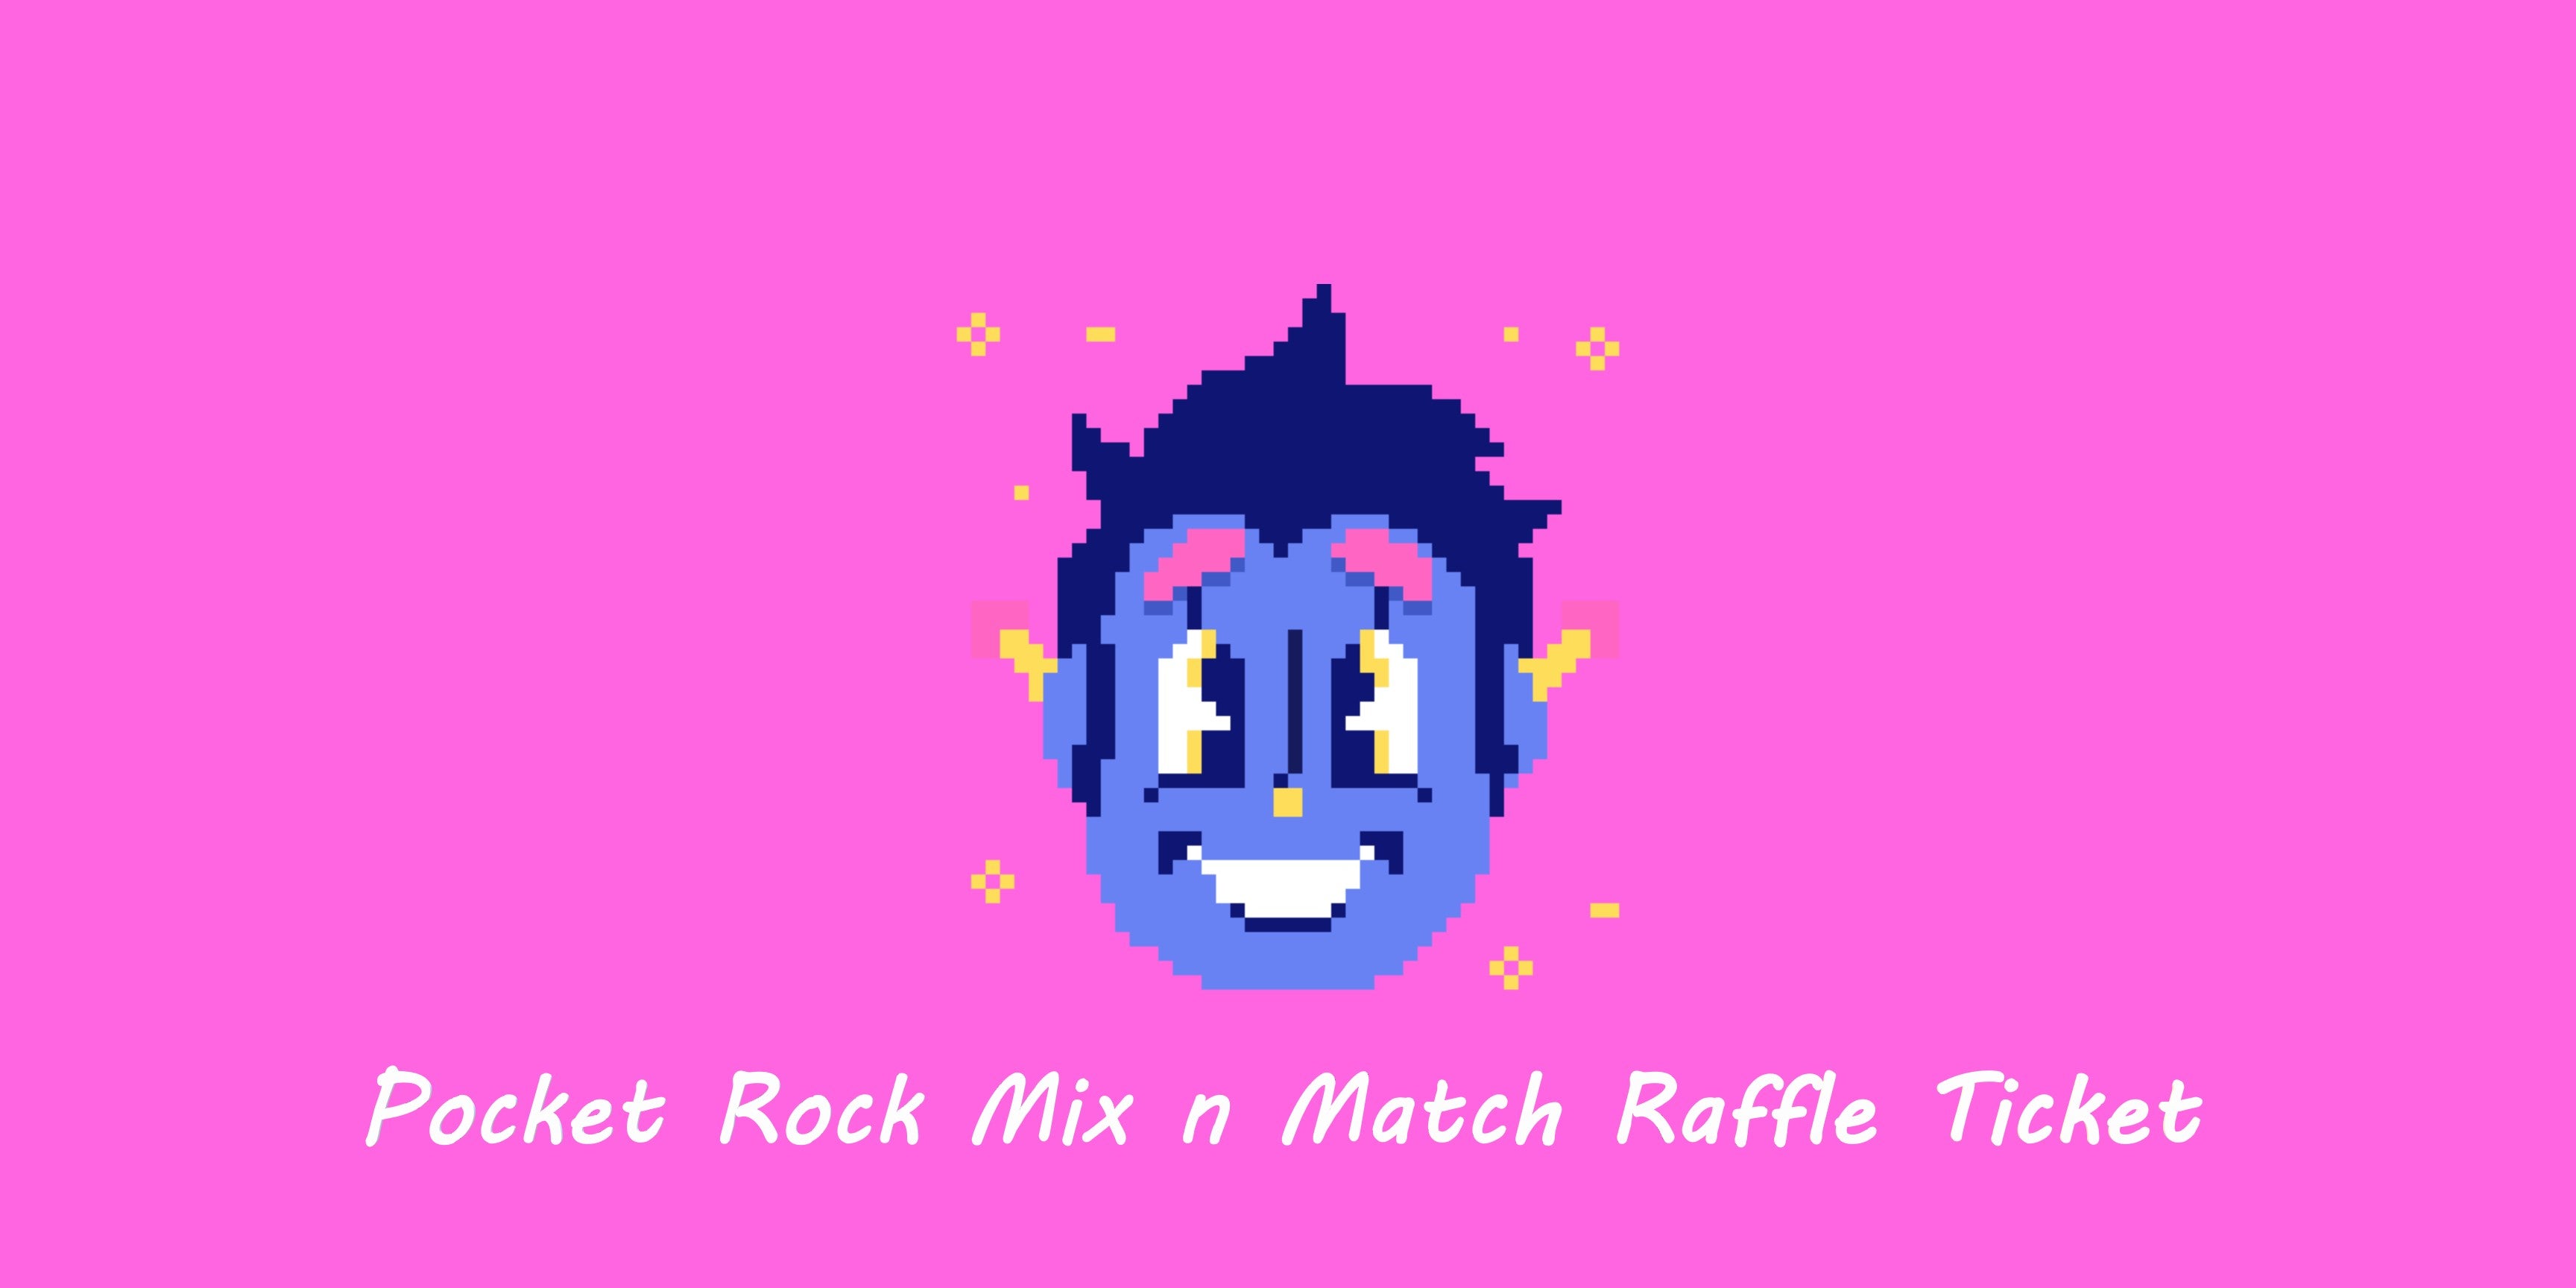 Pocket Rock Mix N Match Raffle Ticket